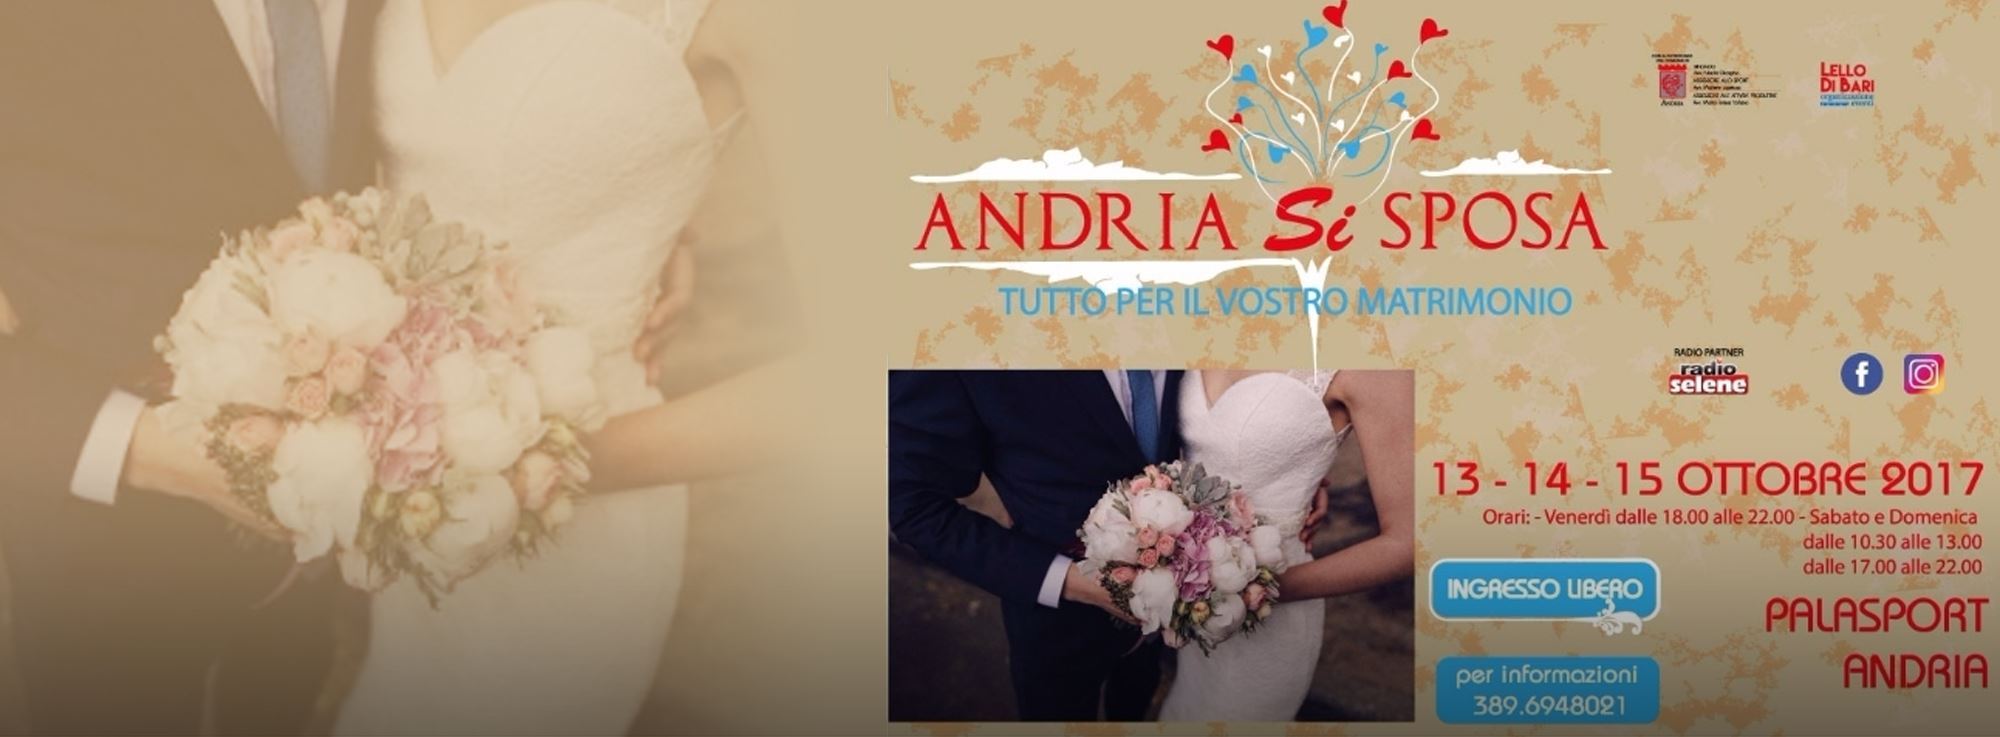 Andria: Andria si sposa